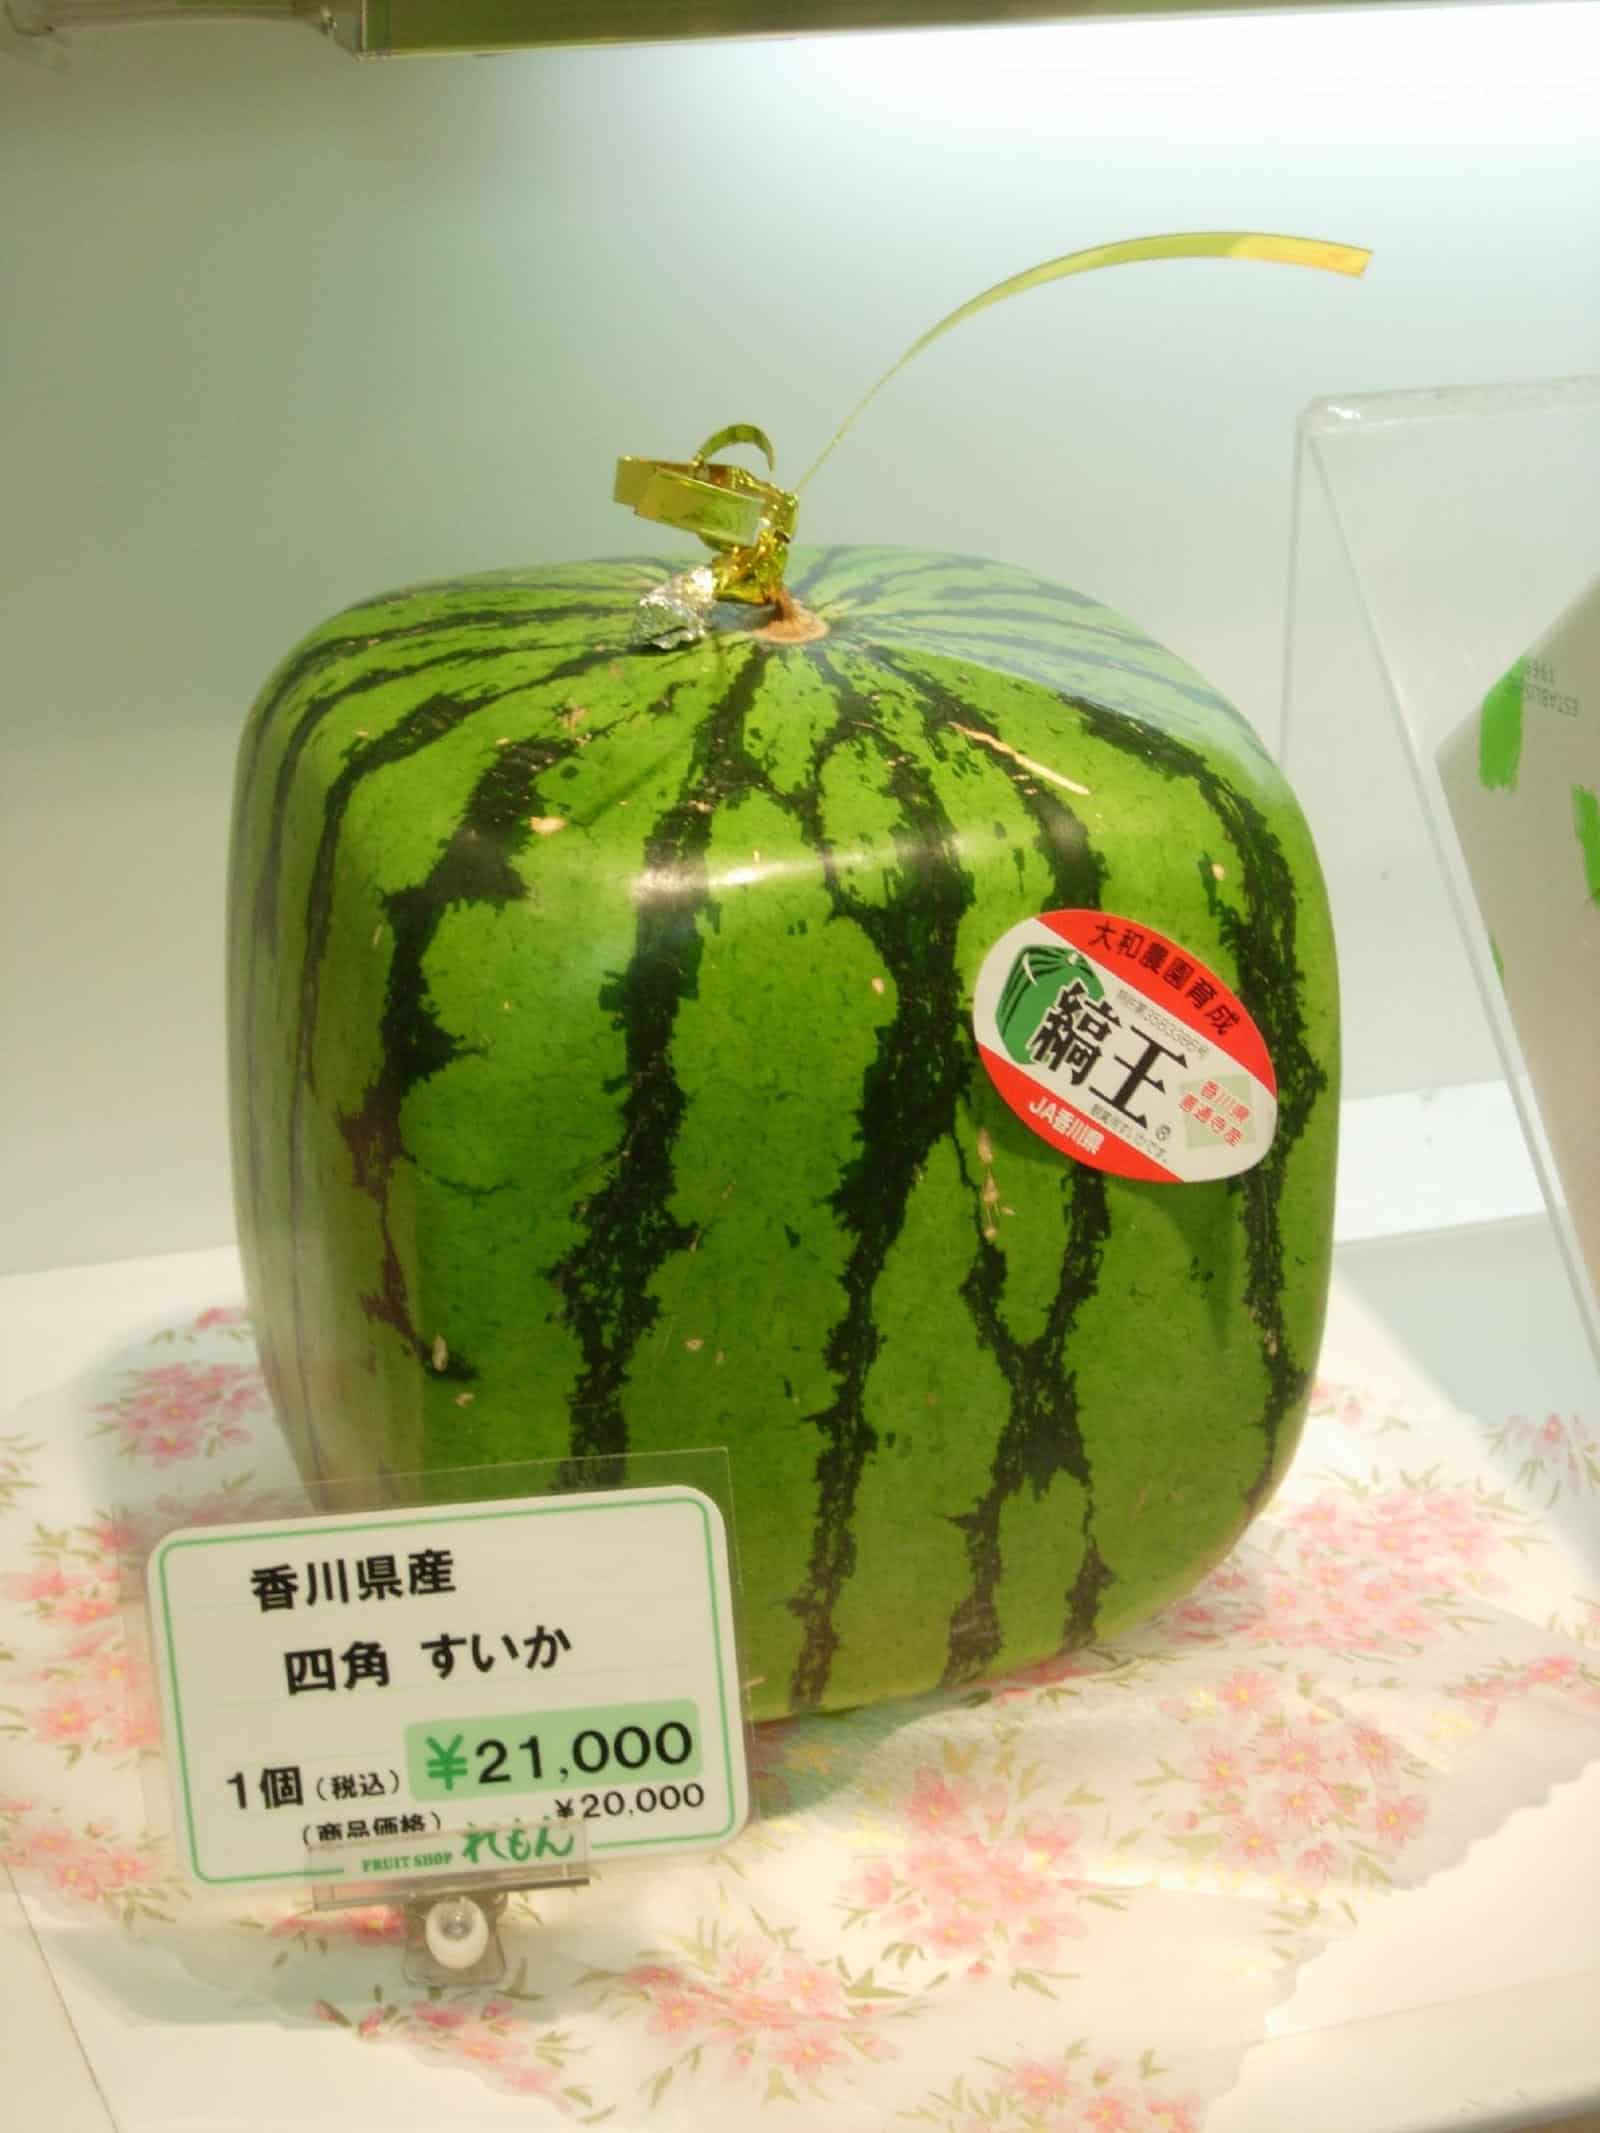 Japan-teuerste-Wassermelone-quadratisch-rechteckig